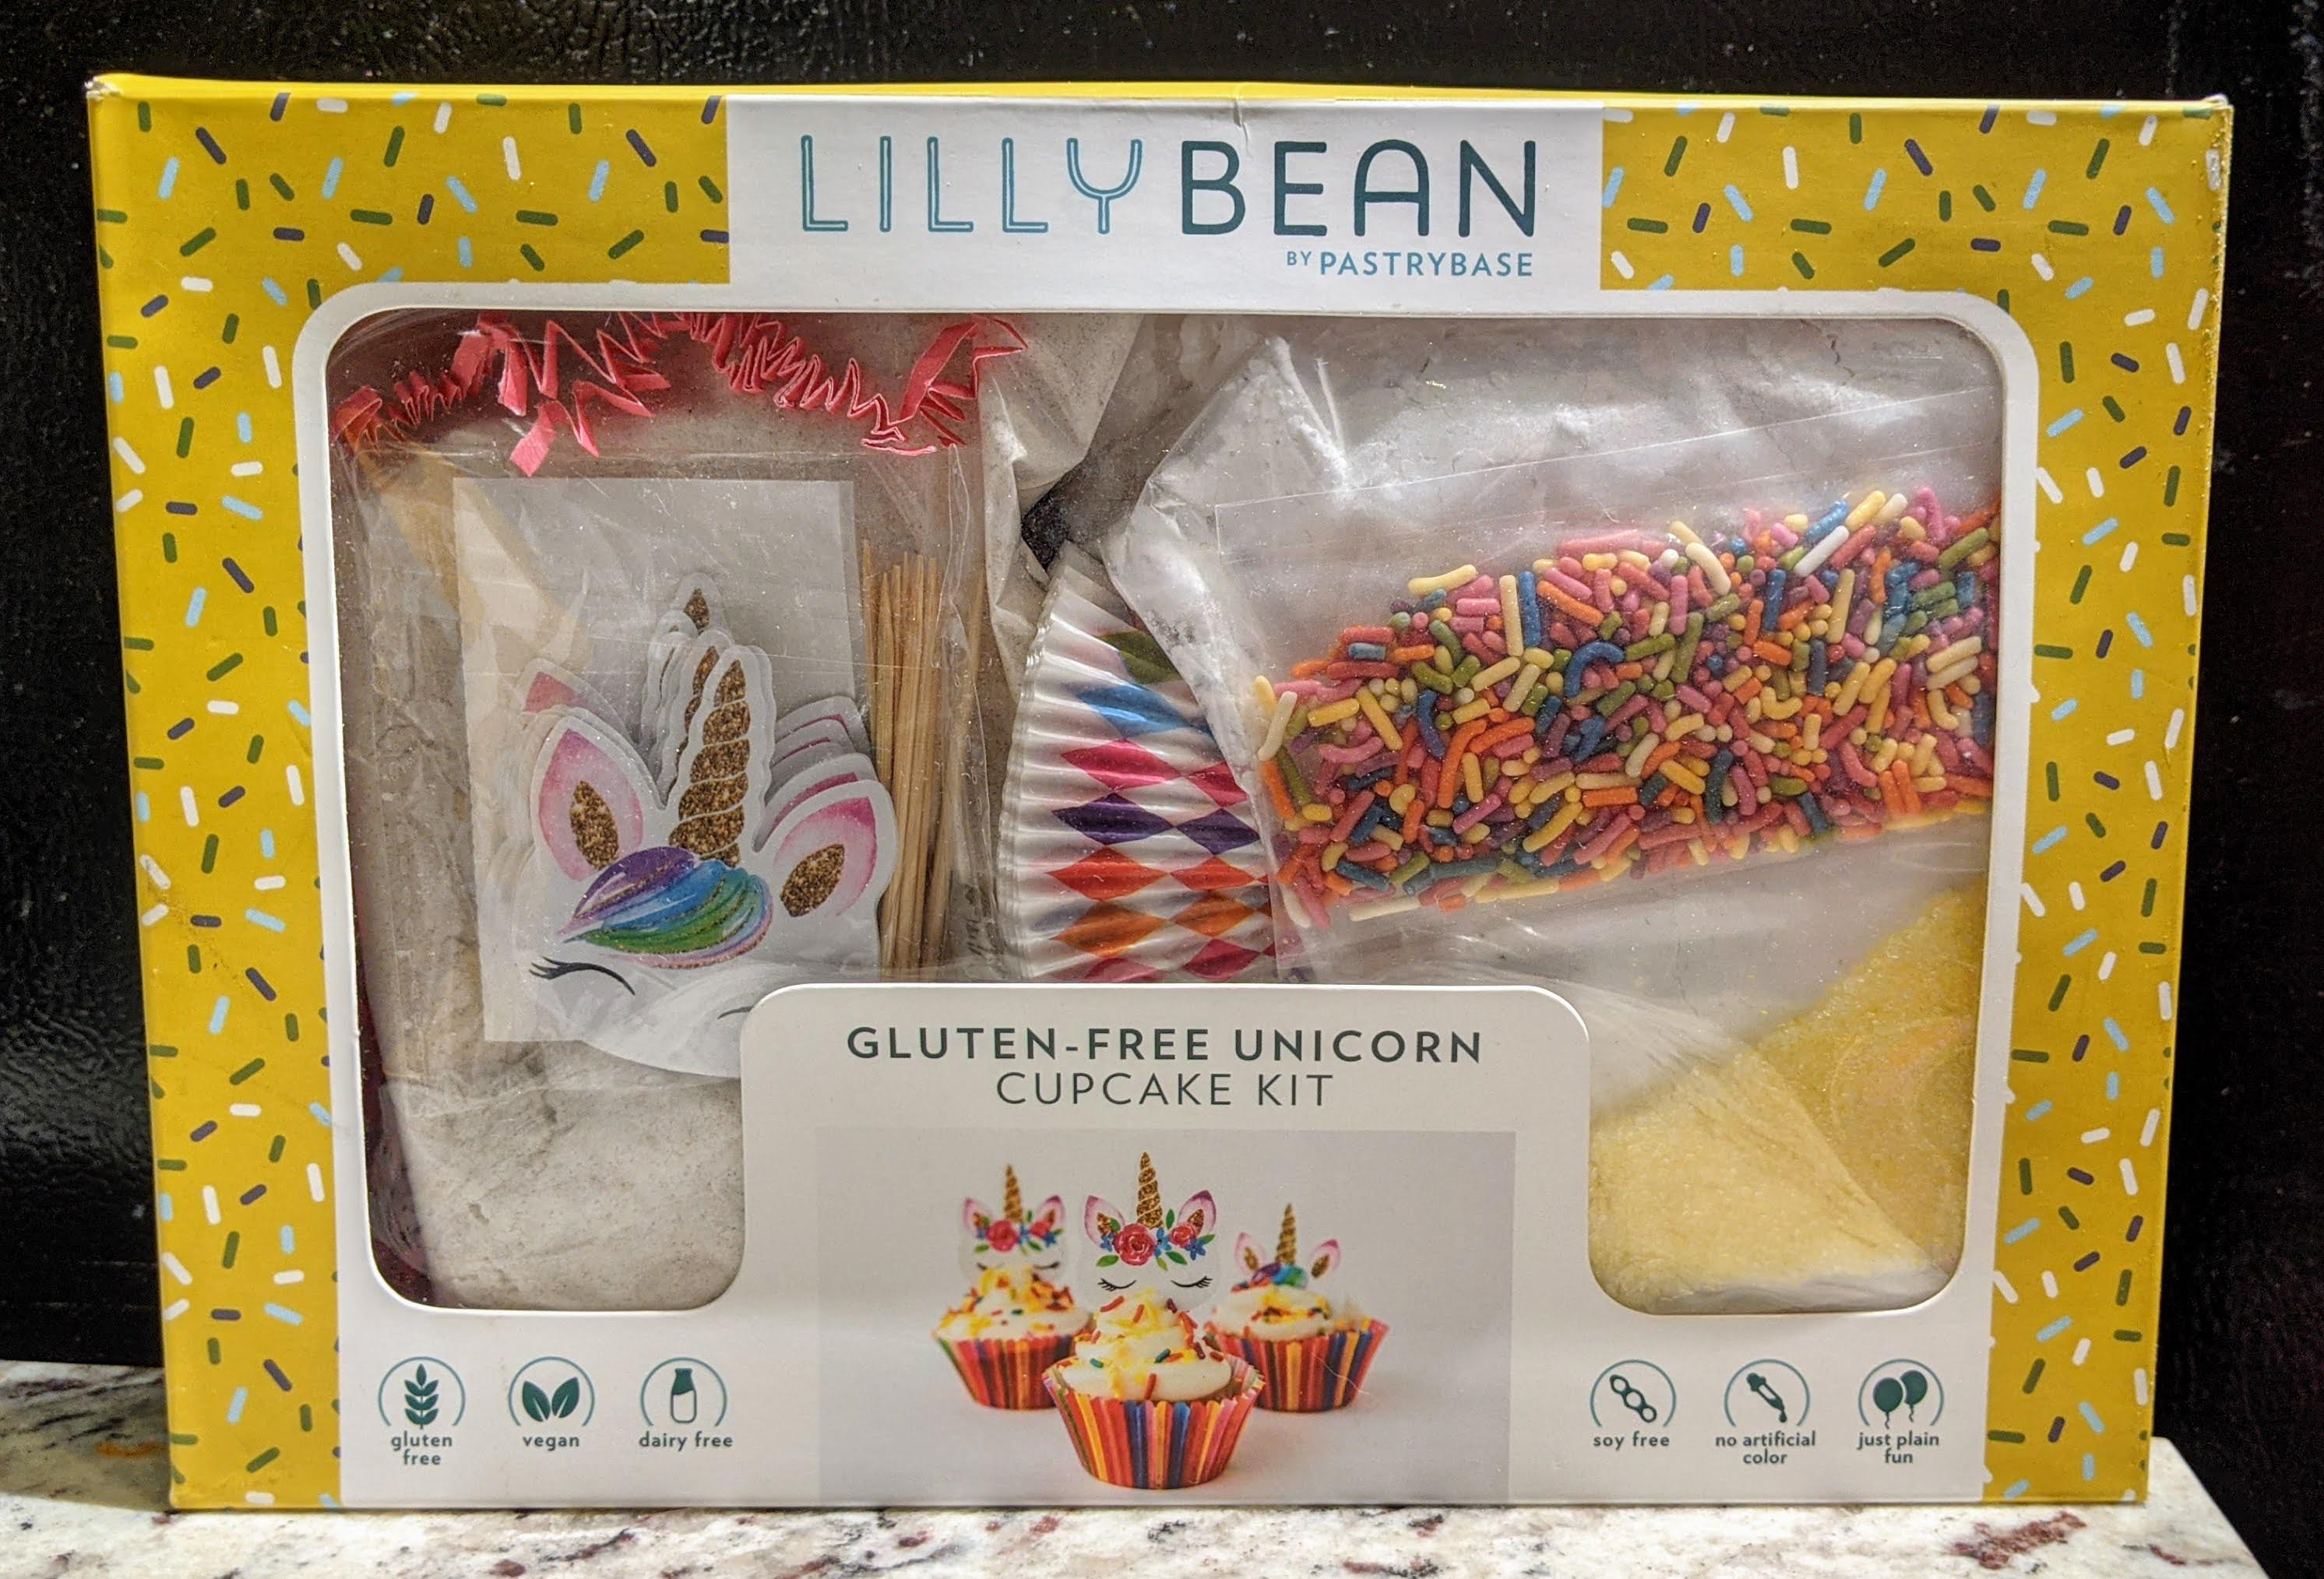 Gluten Free Baking Kit